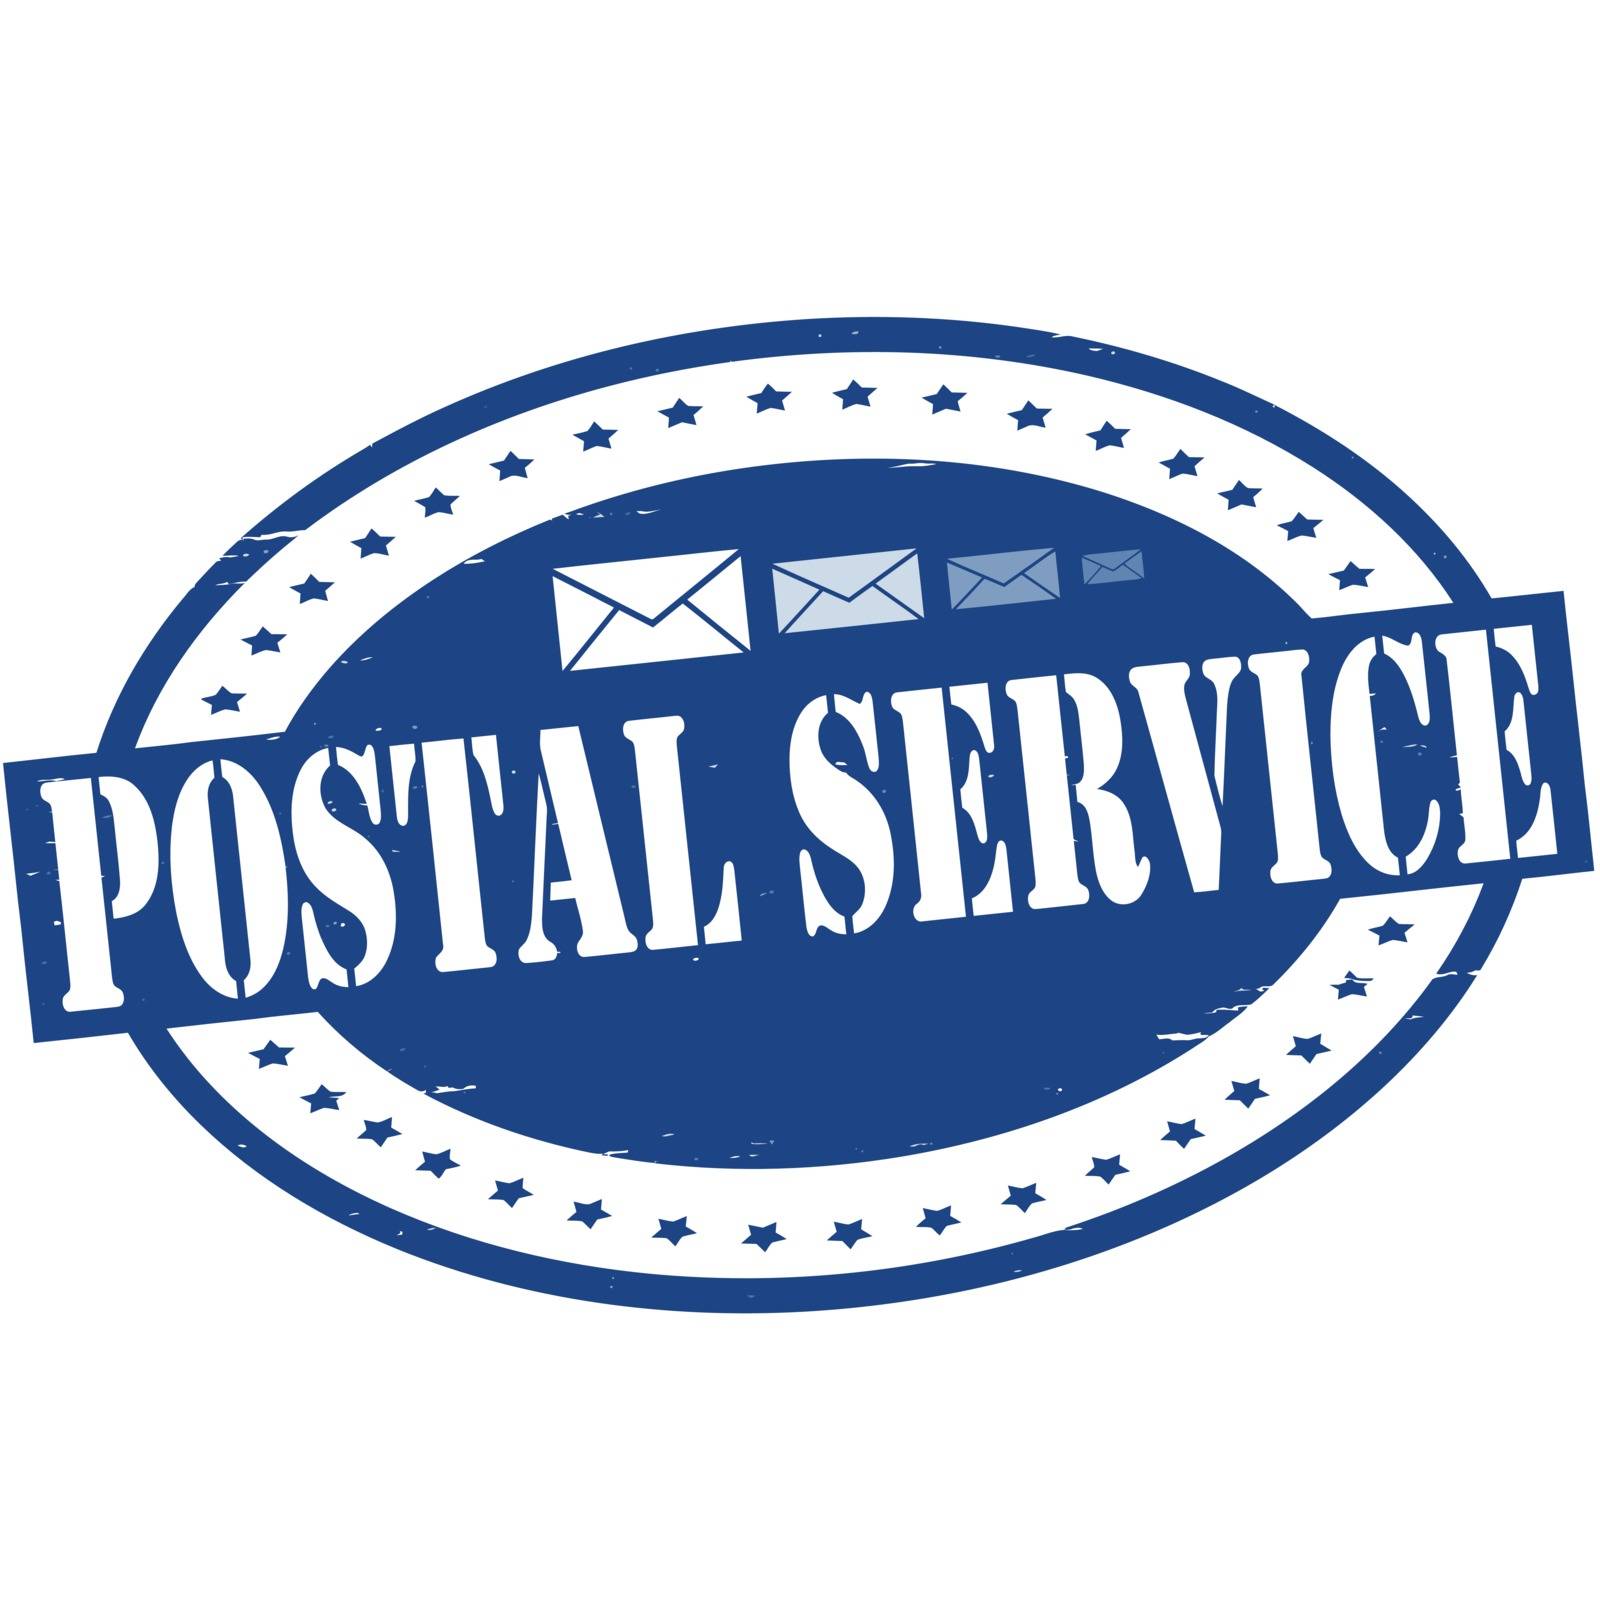 Postal service by carmenbobo